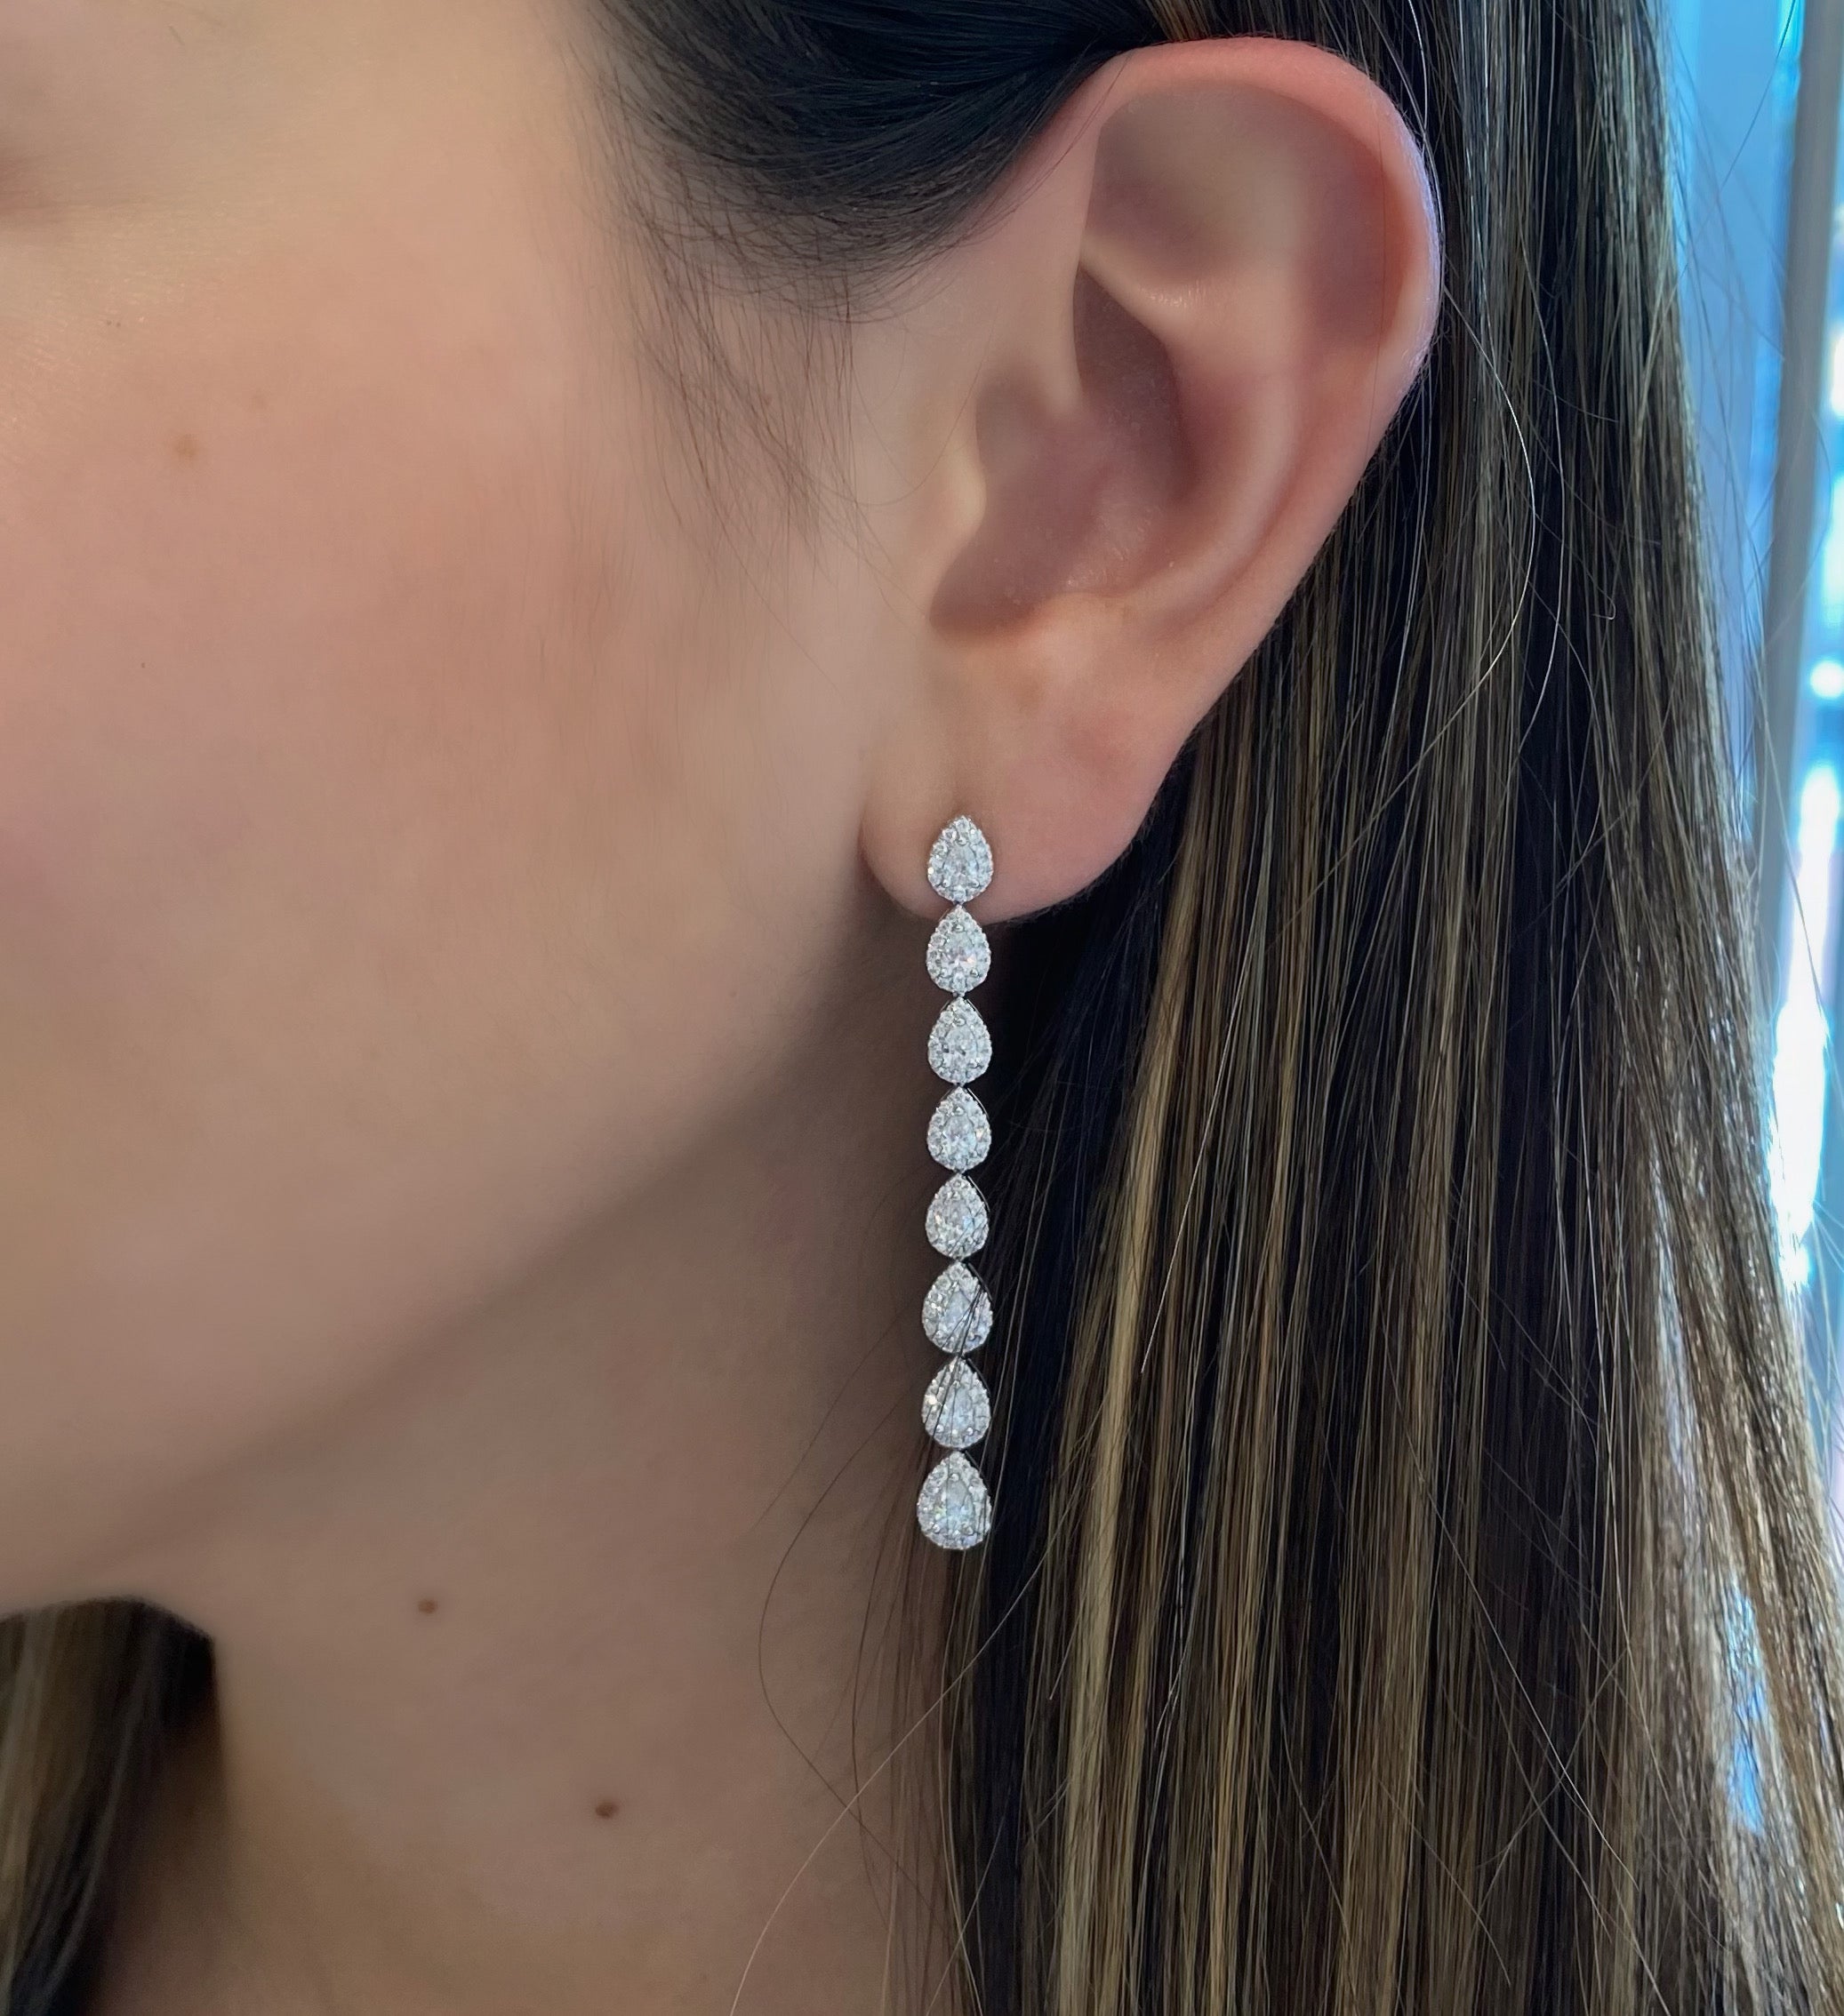 Beautiful Long Diamond Earrings Designs | Latest Diamond Earrings  Collection. - YouTube